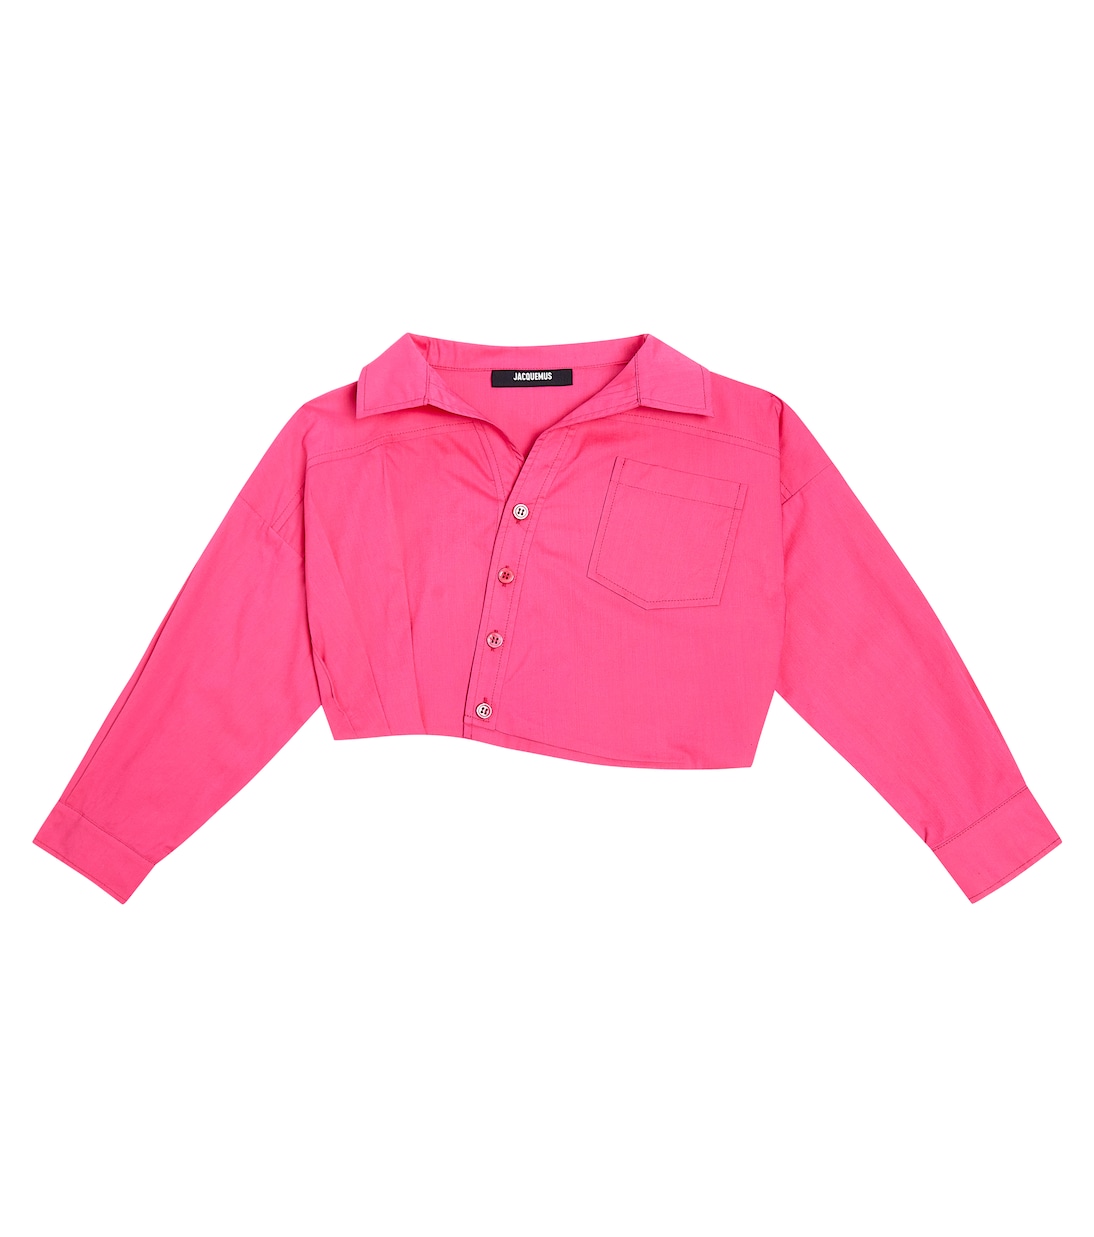 Топ la chemise mejean из льна и хлопка Jacquemus Enfant, розовый джемпер jacquemus розовый